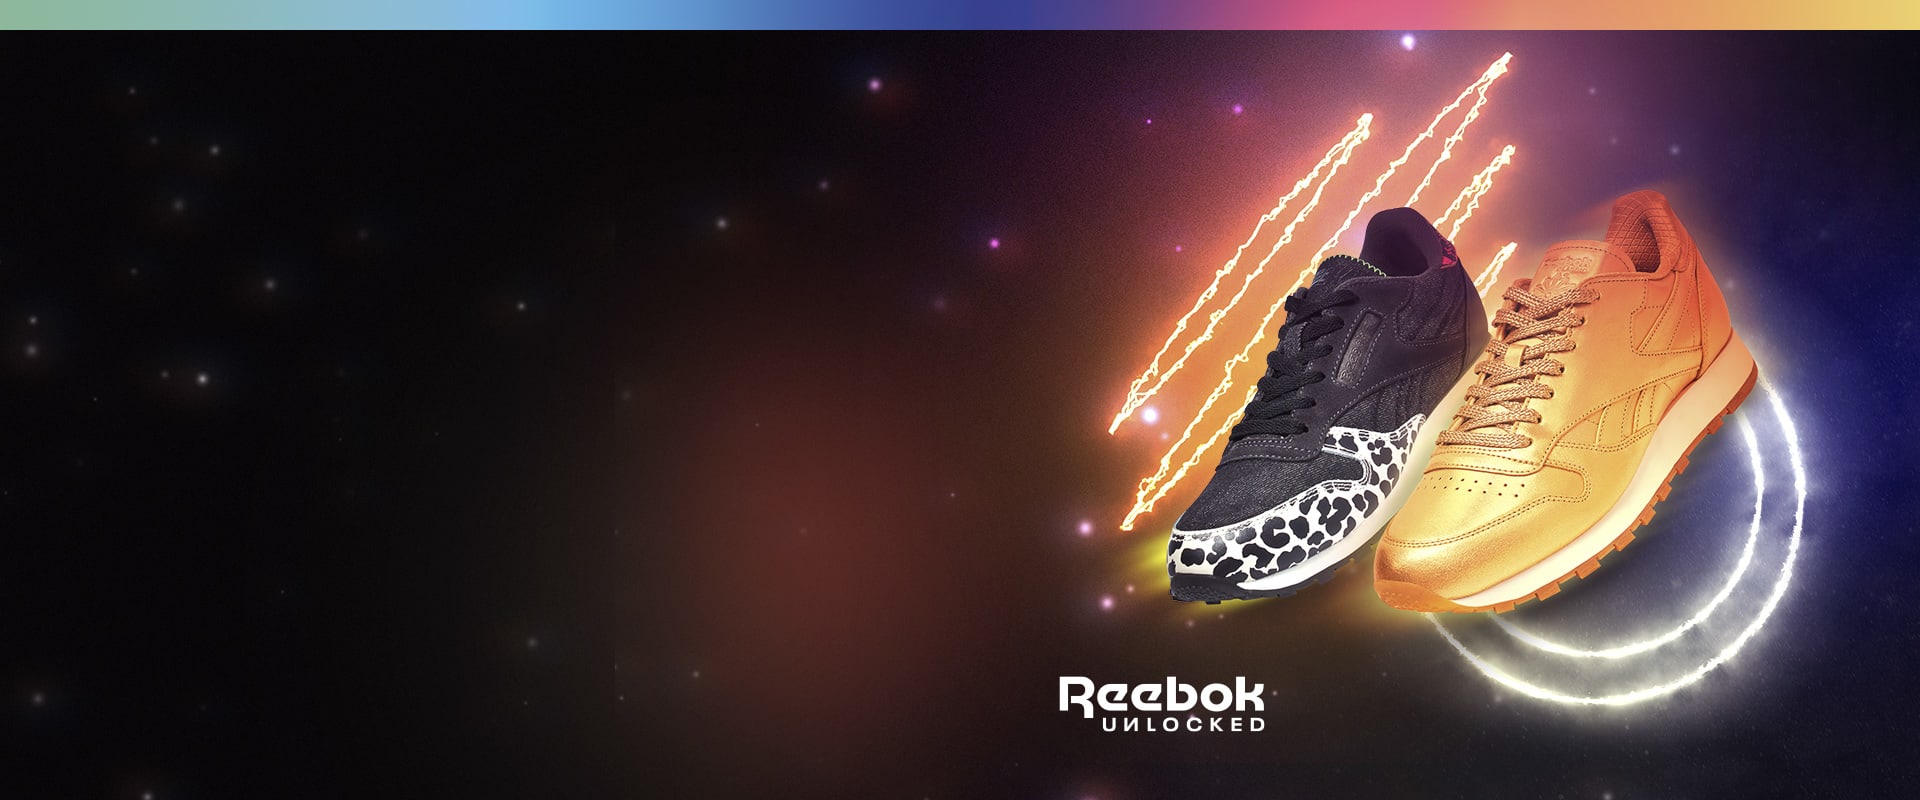 Reebok US | Reebok Official Website 